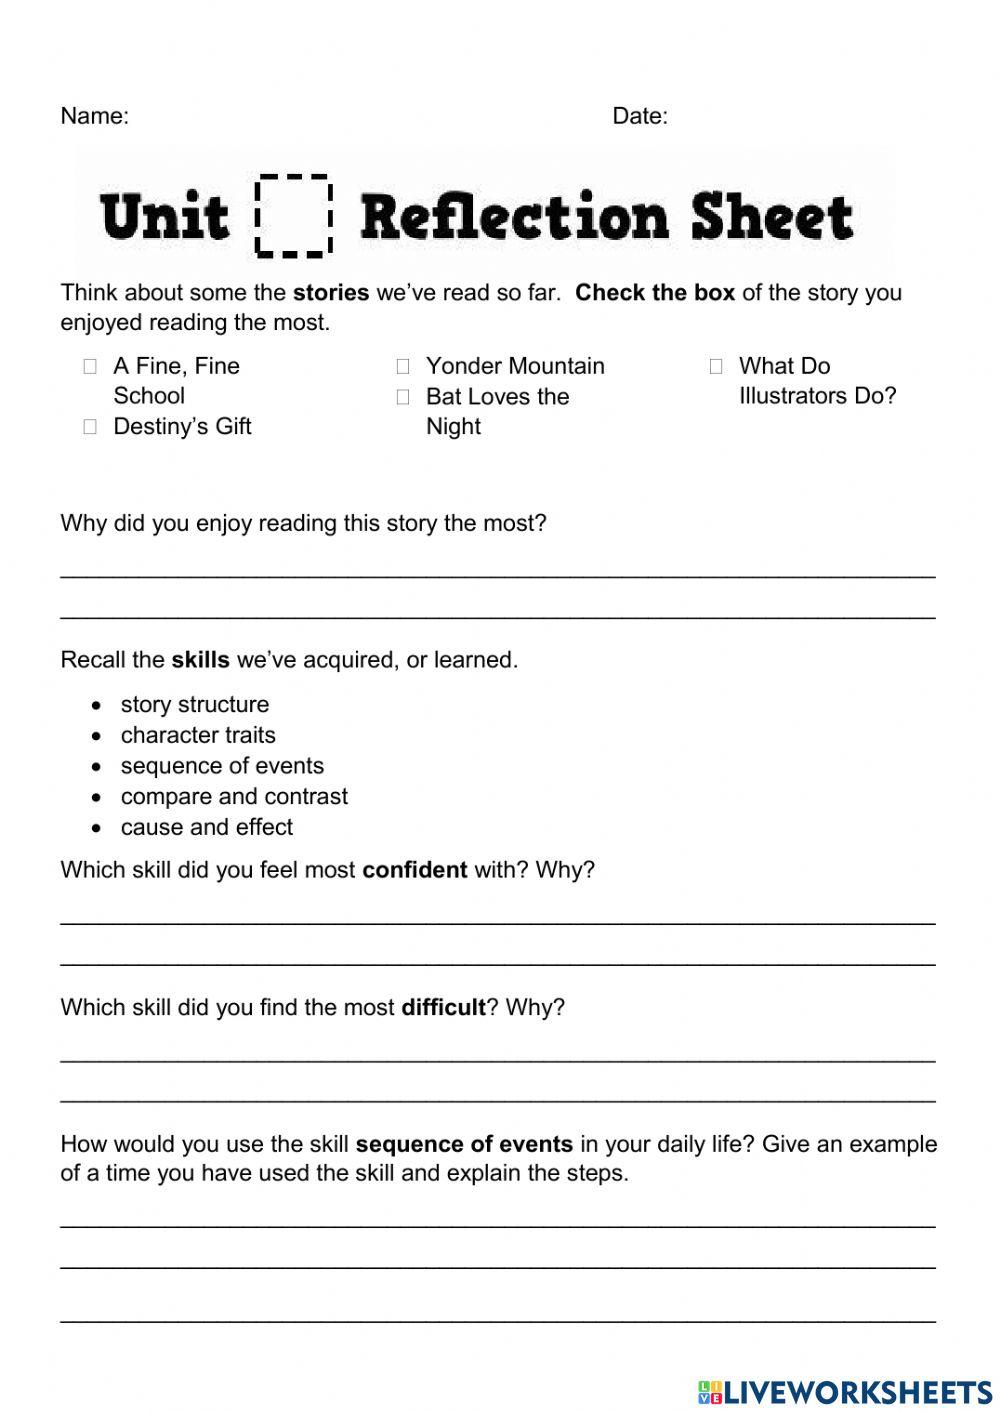 Unit reflection sheet